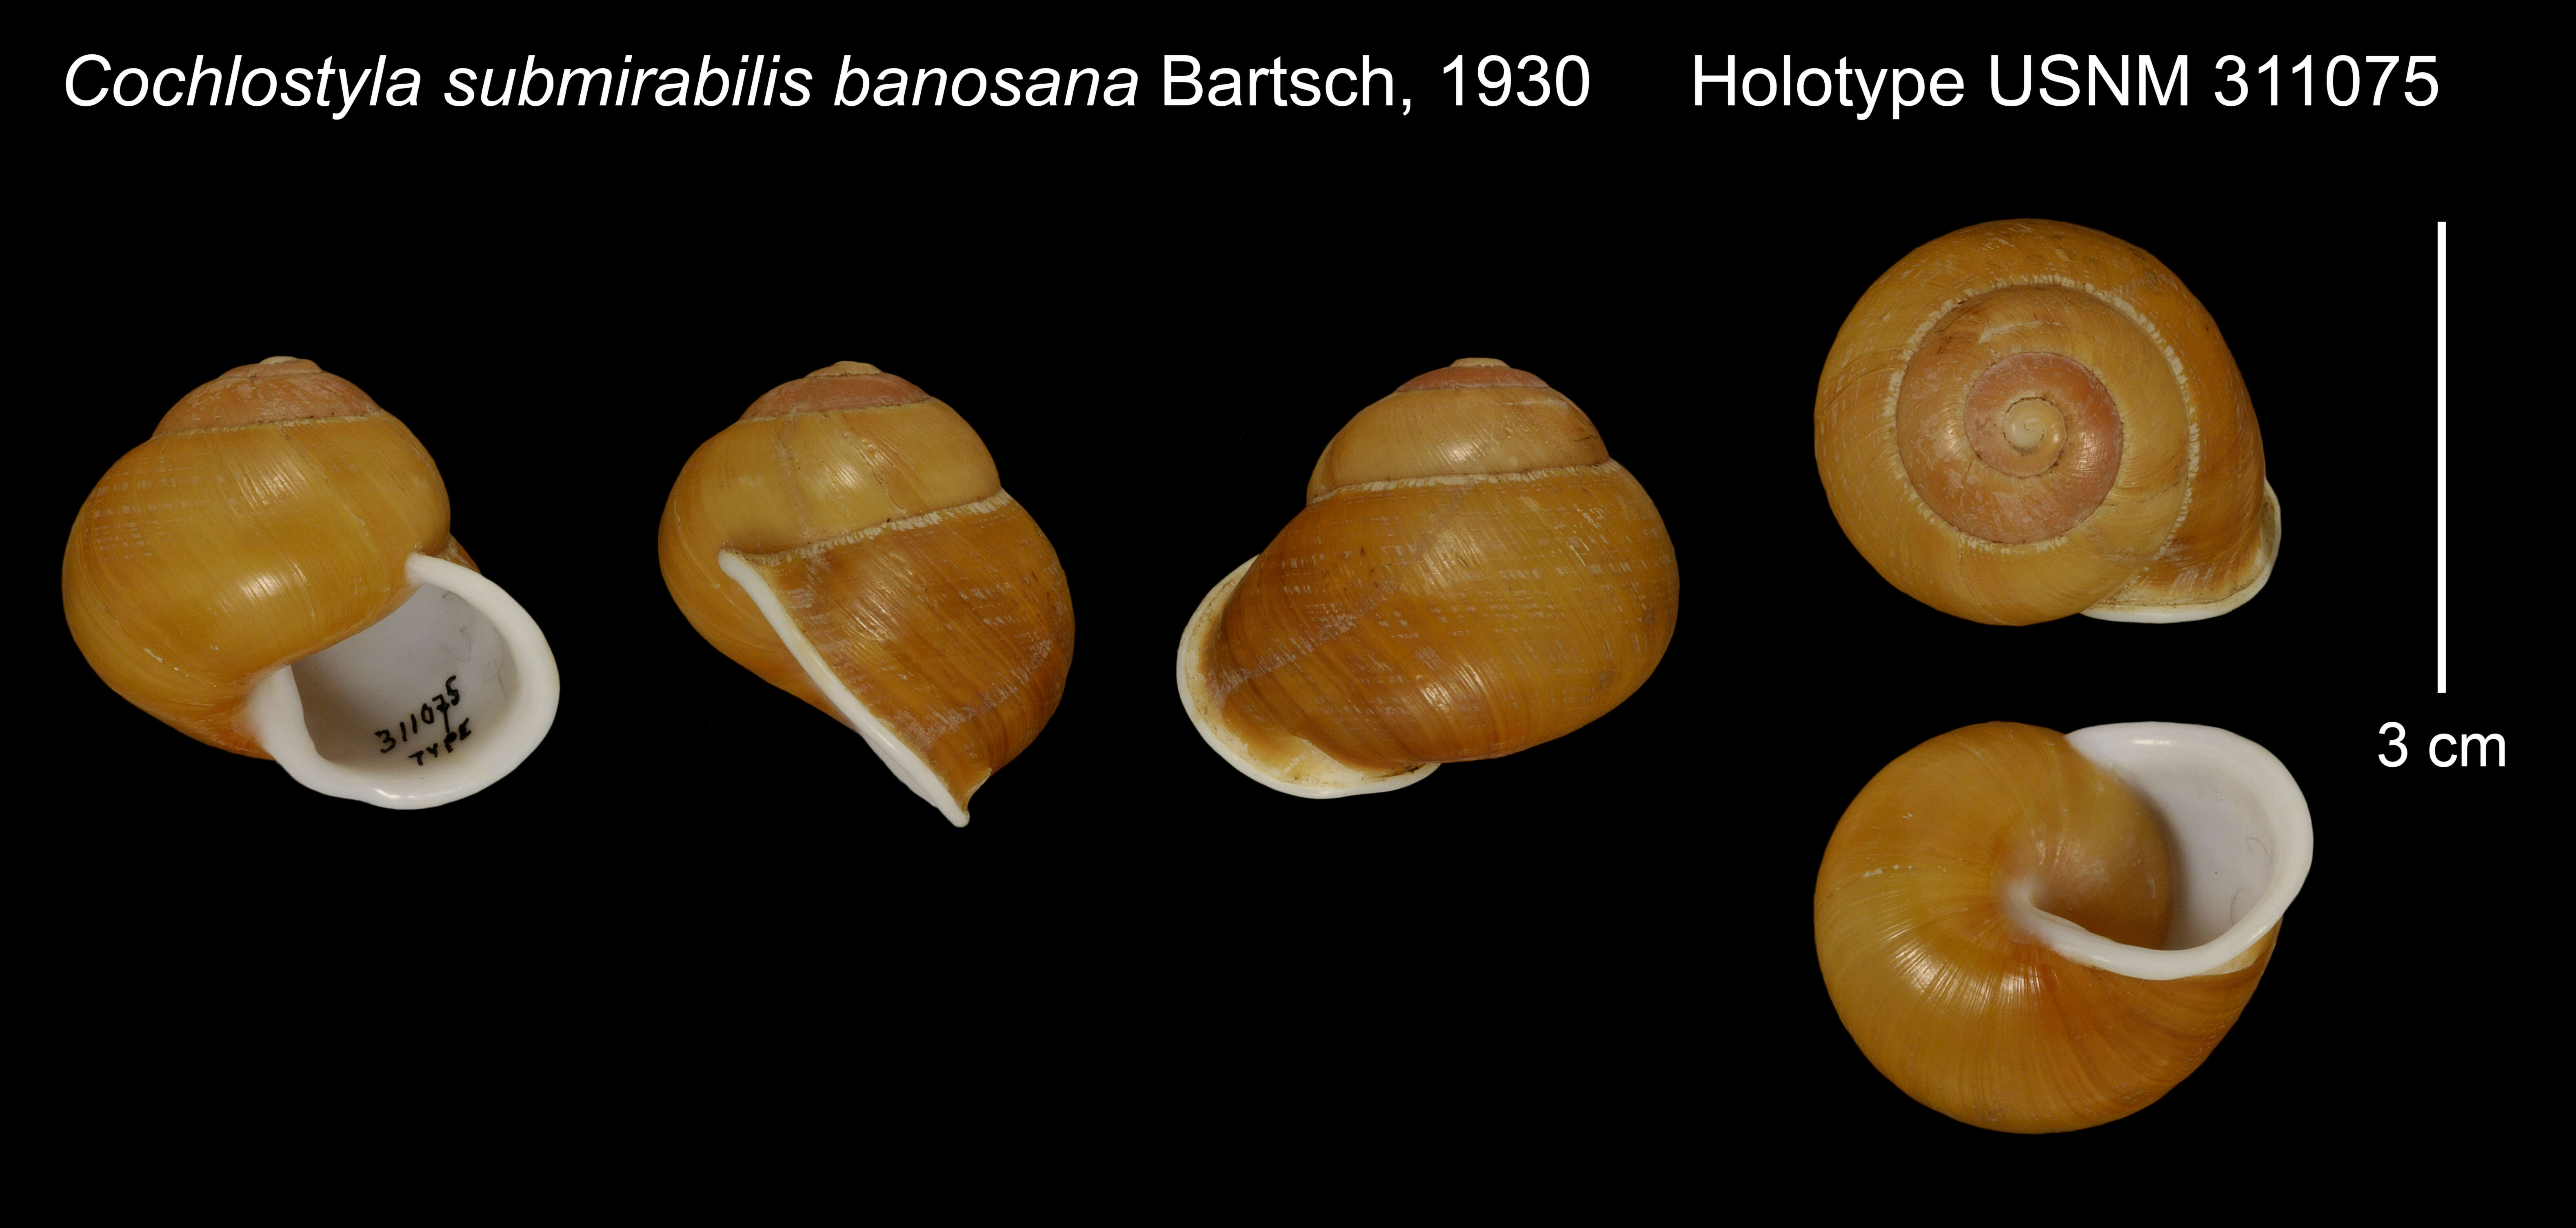 Image of Cochlostyla submirabilis banosana Bartsch